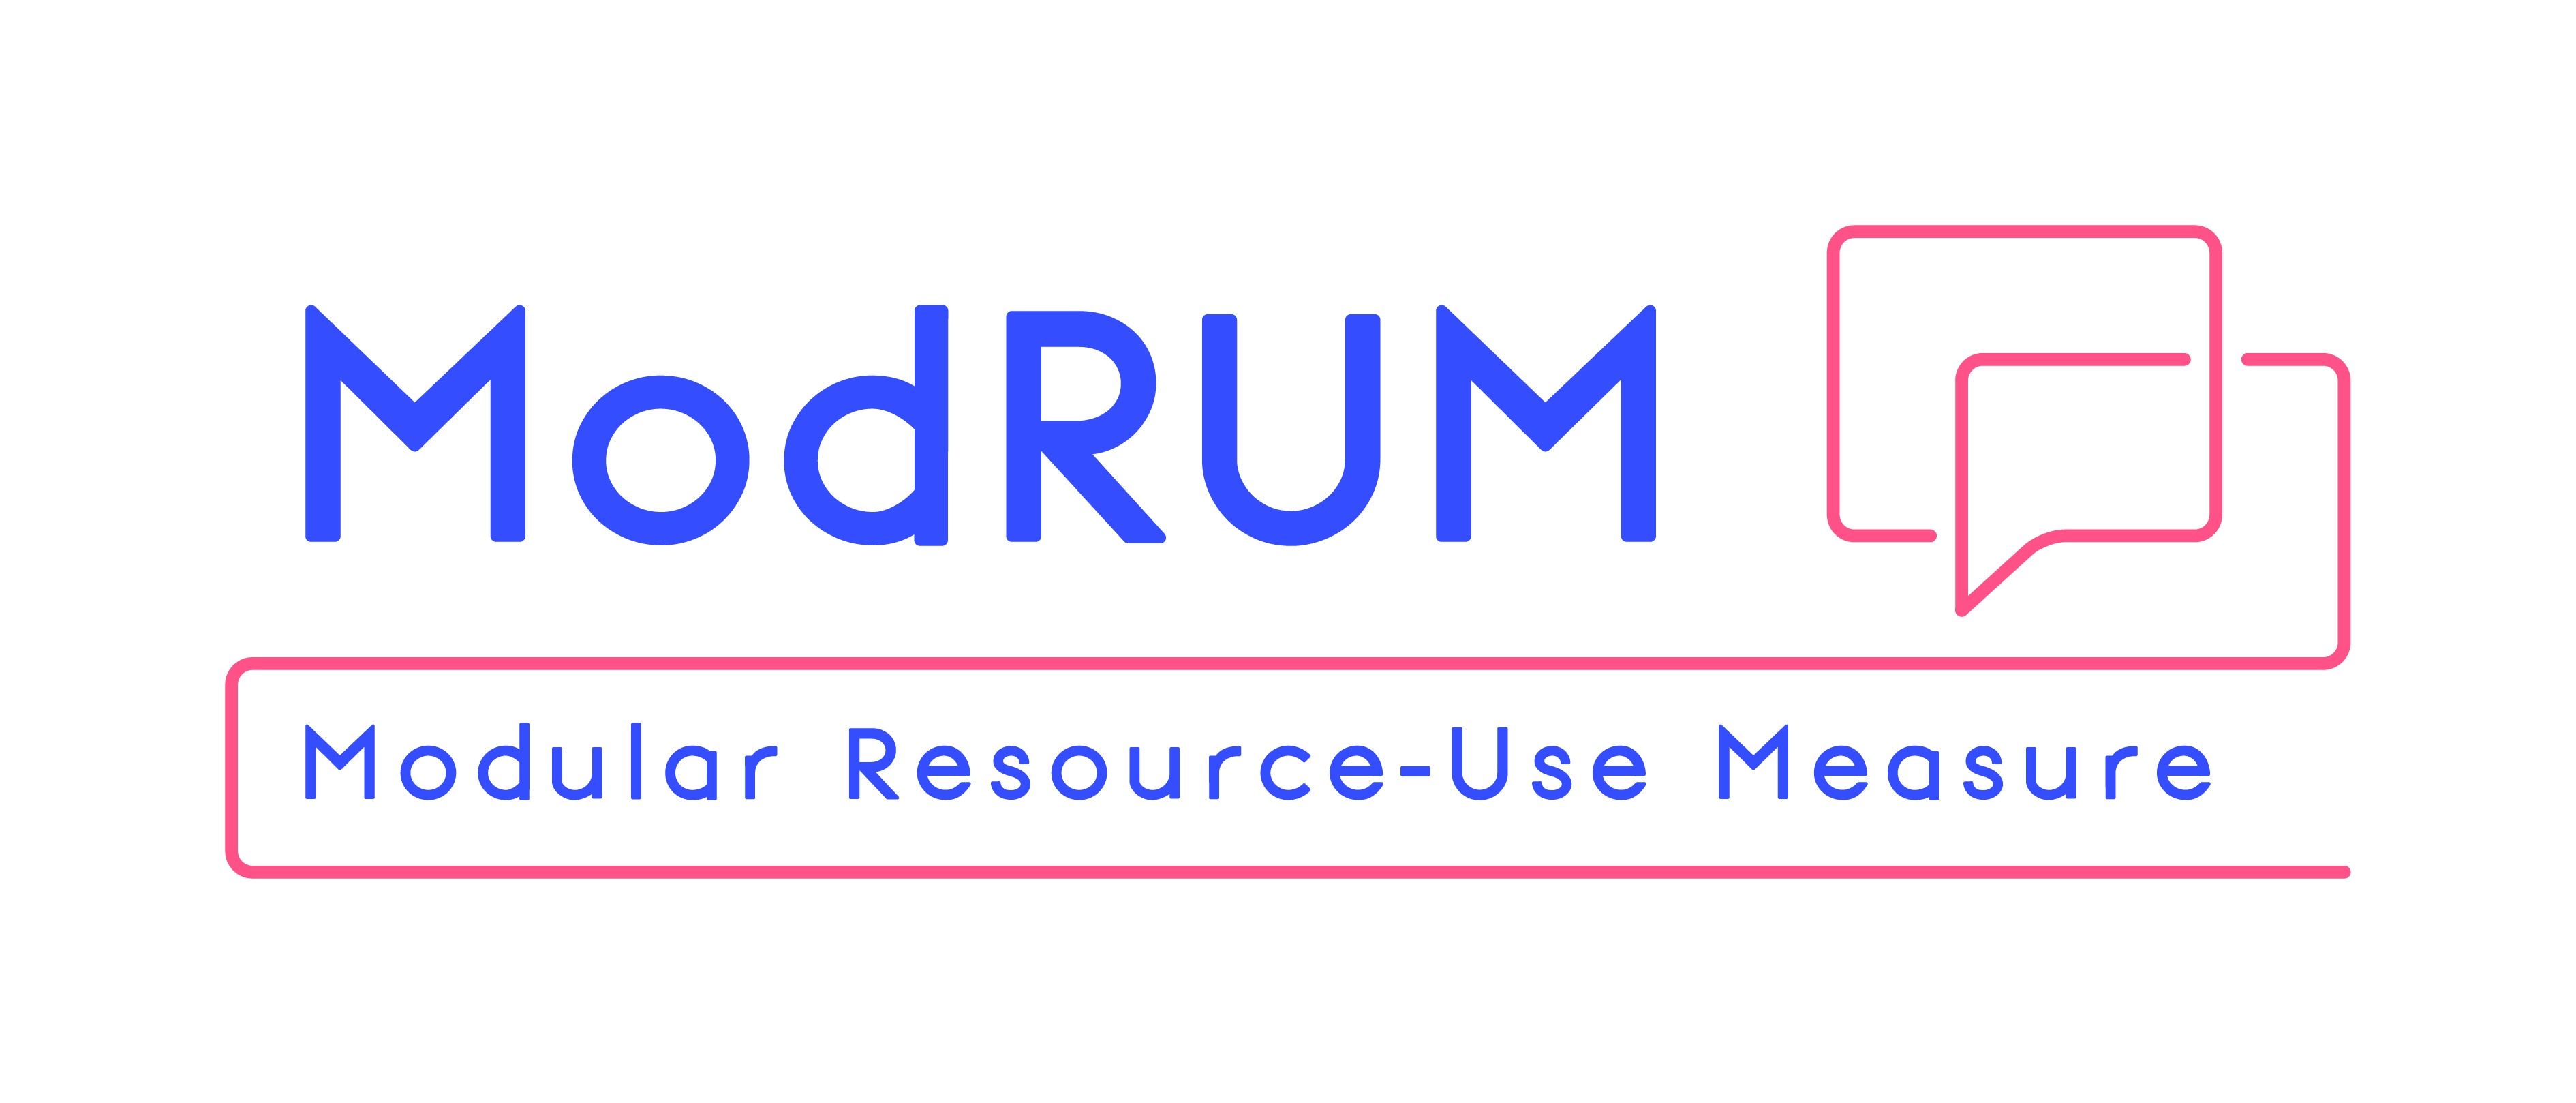 ModRUM - Modular Resource-Use Measure